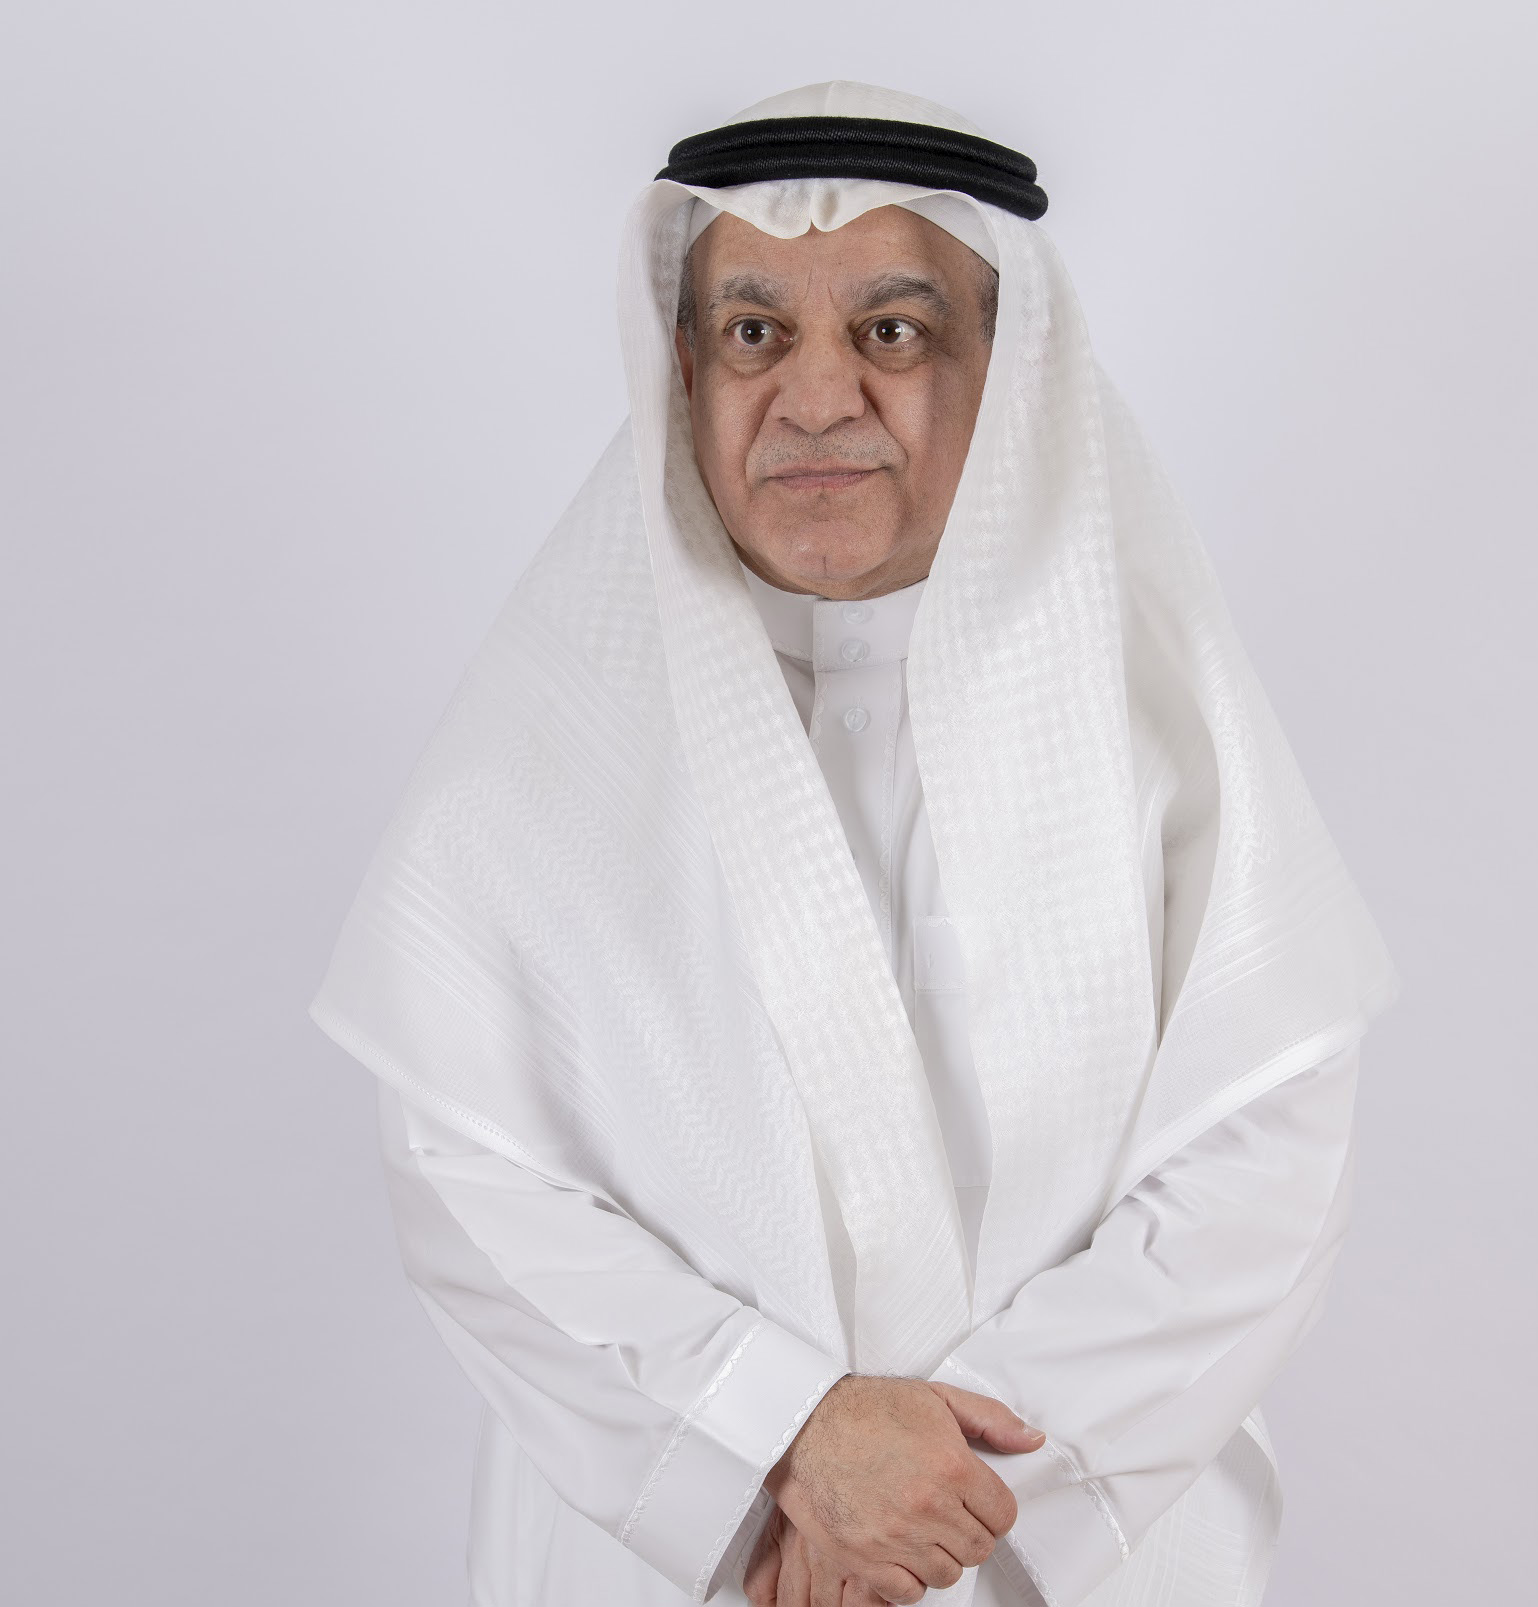 Eng. Abdulrahman Ibrahim Al-Ruwaita